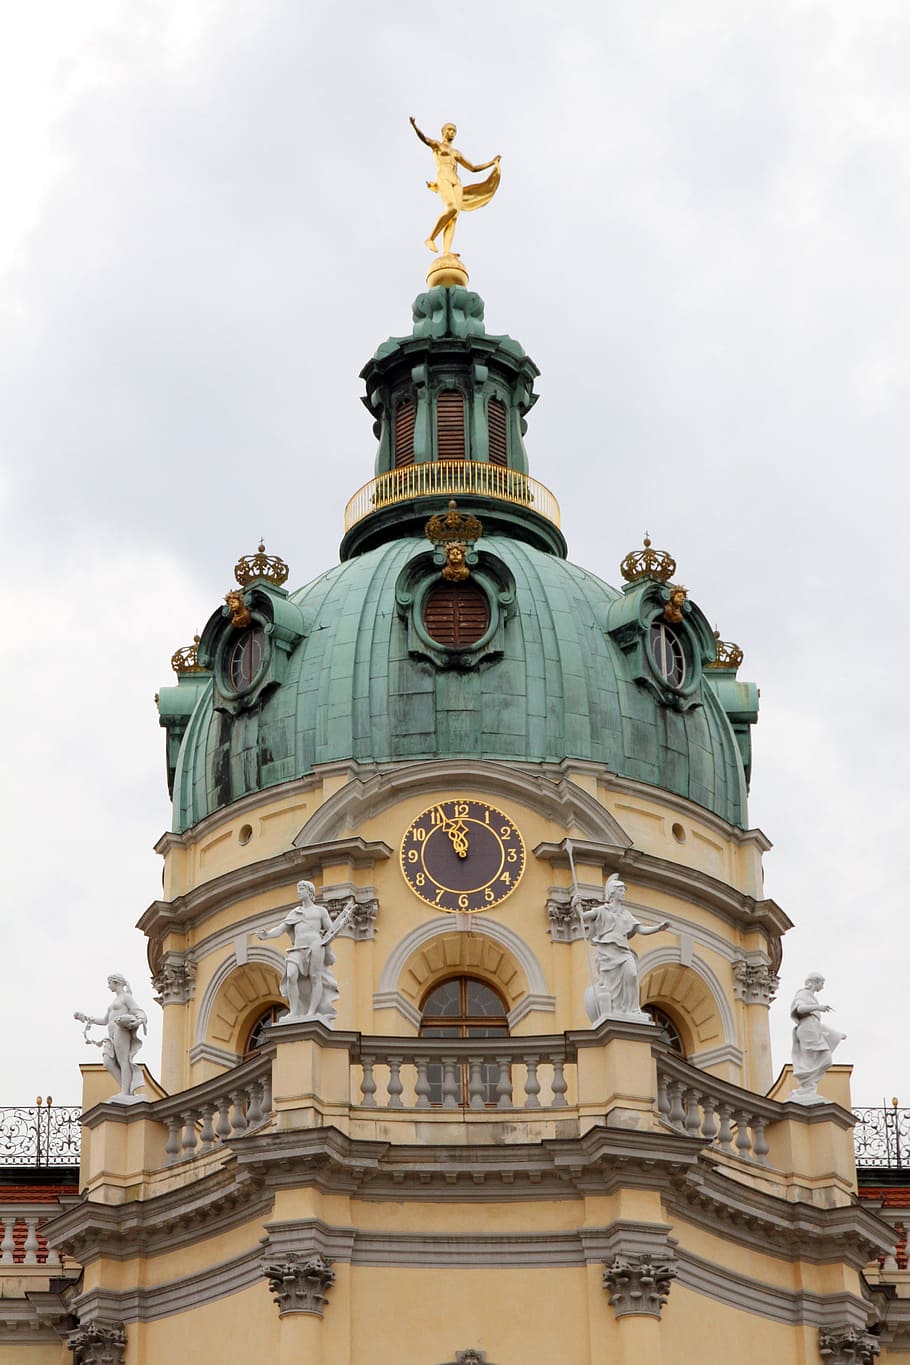 charlottenburg, dome, palace, berlin, architecture, baroque, building, european, europe, facade